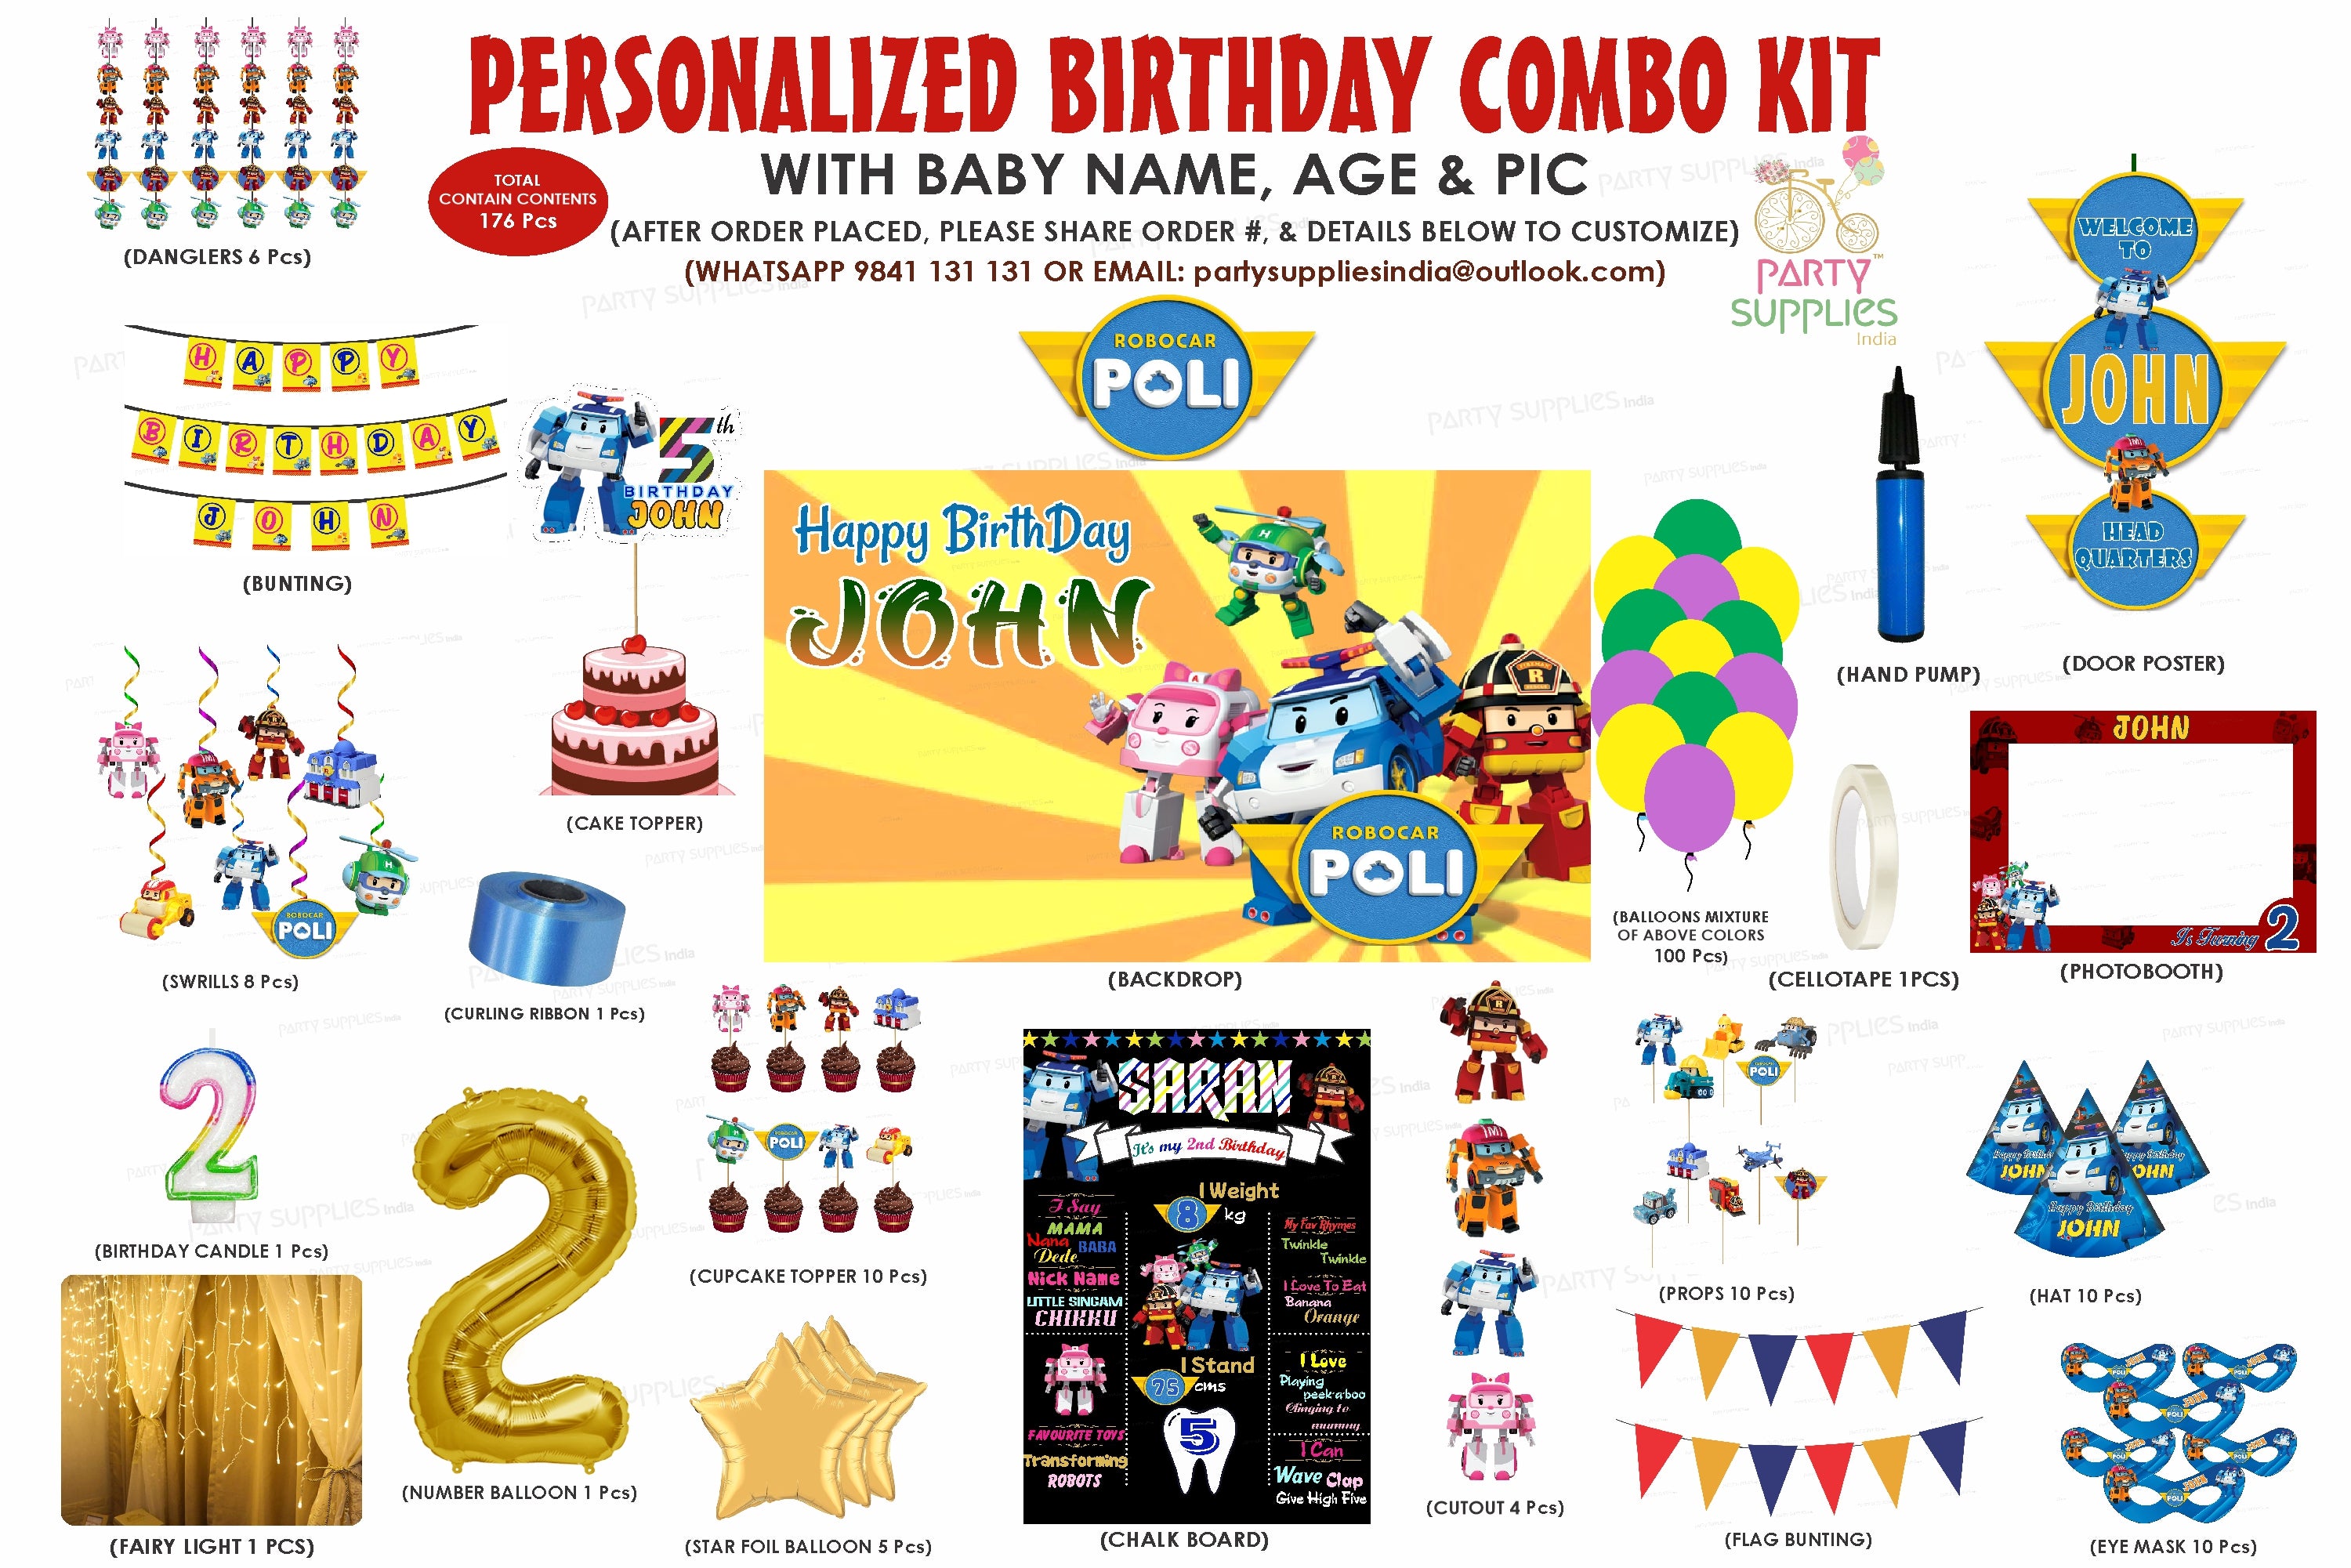 PSI Robo Poli   Theme Premium Combo Kit